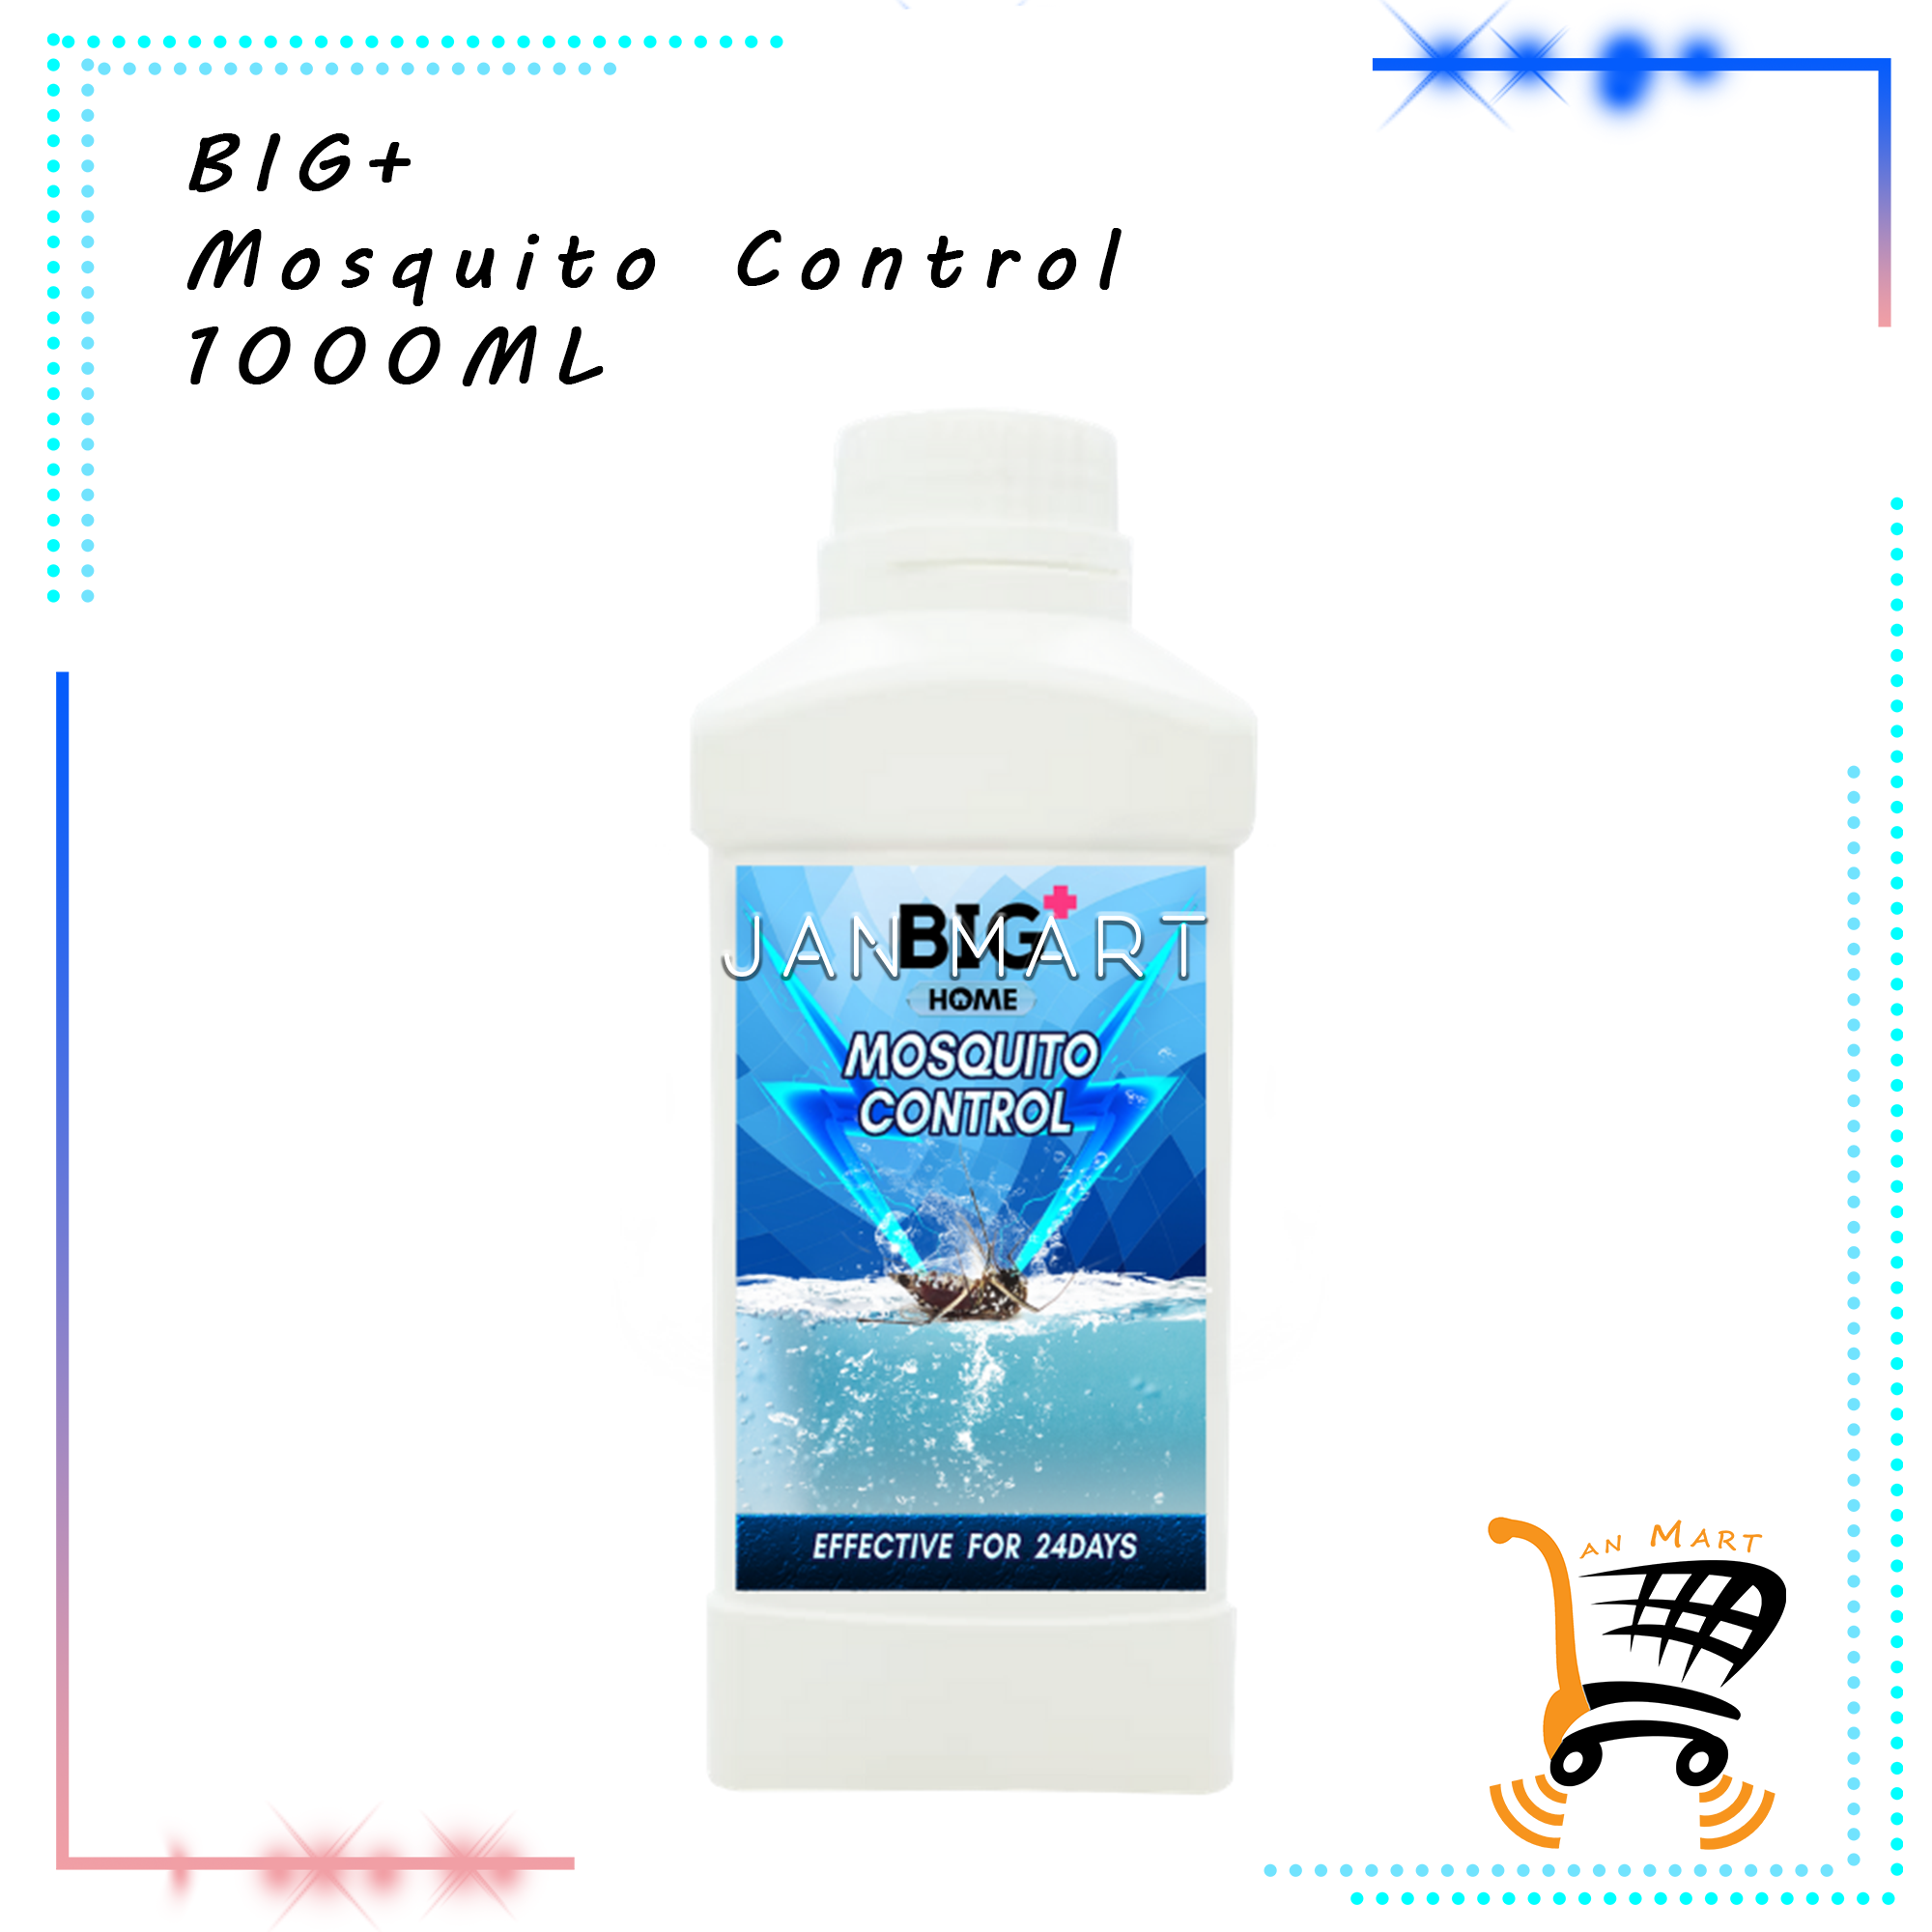 BIG+ Mosquito Control 1000ML